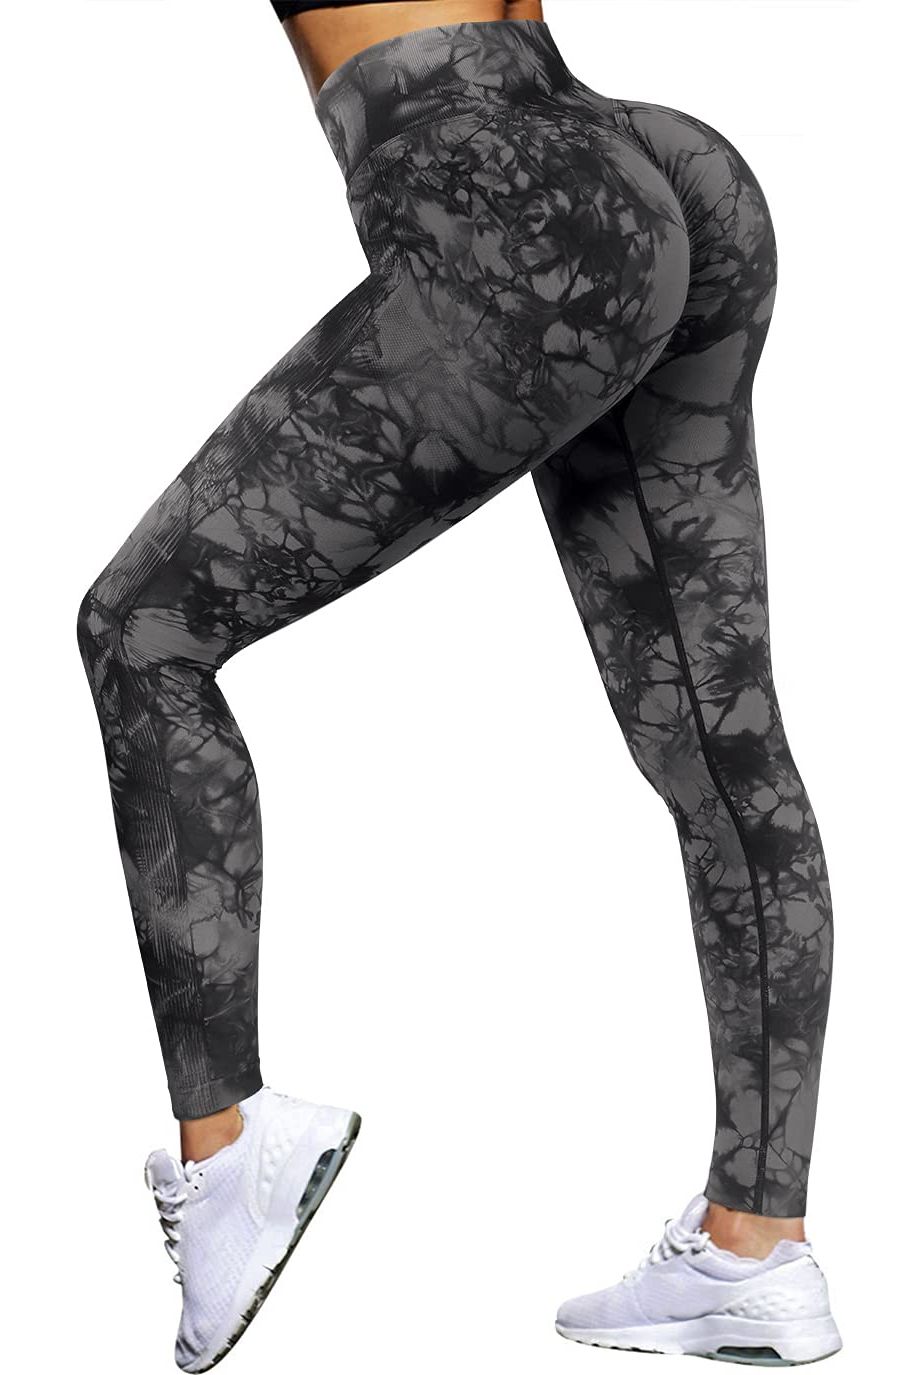 Long Yoga Pants for Women Tall Butt Lifting Workout Leggings Lace